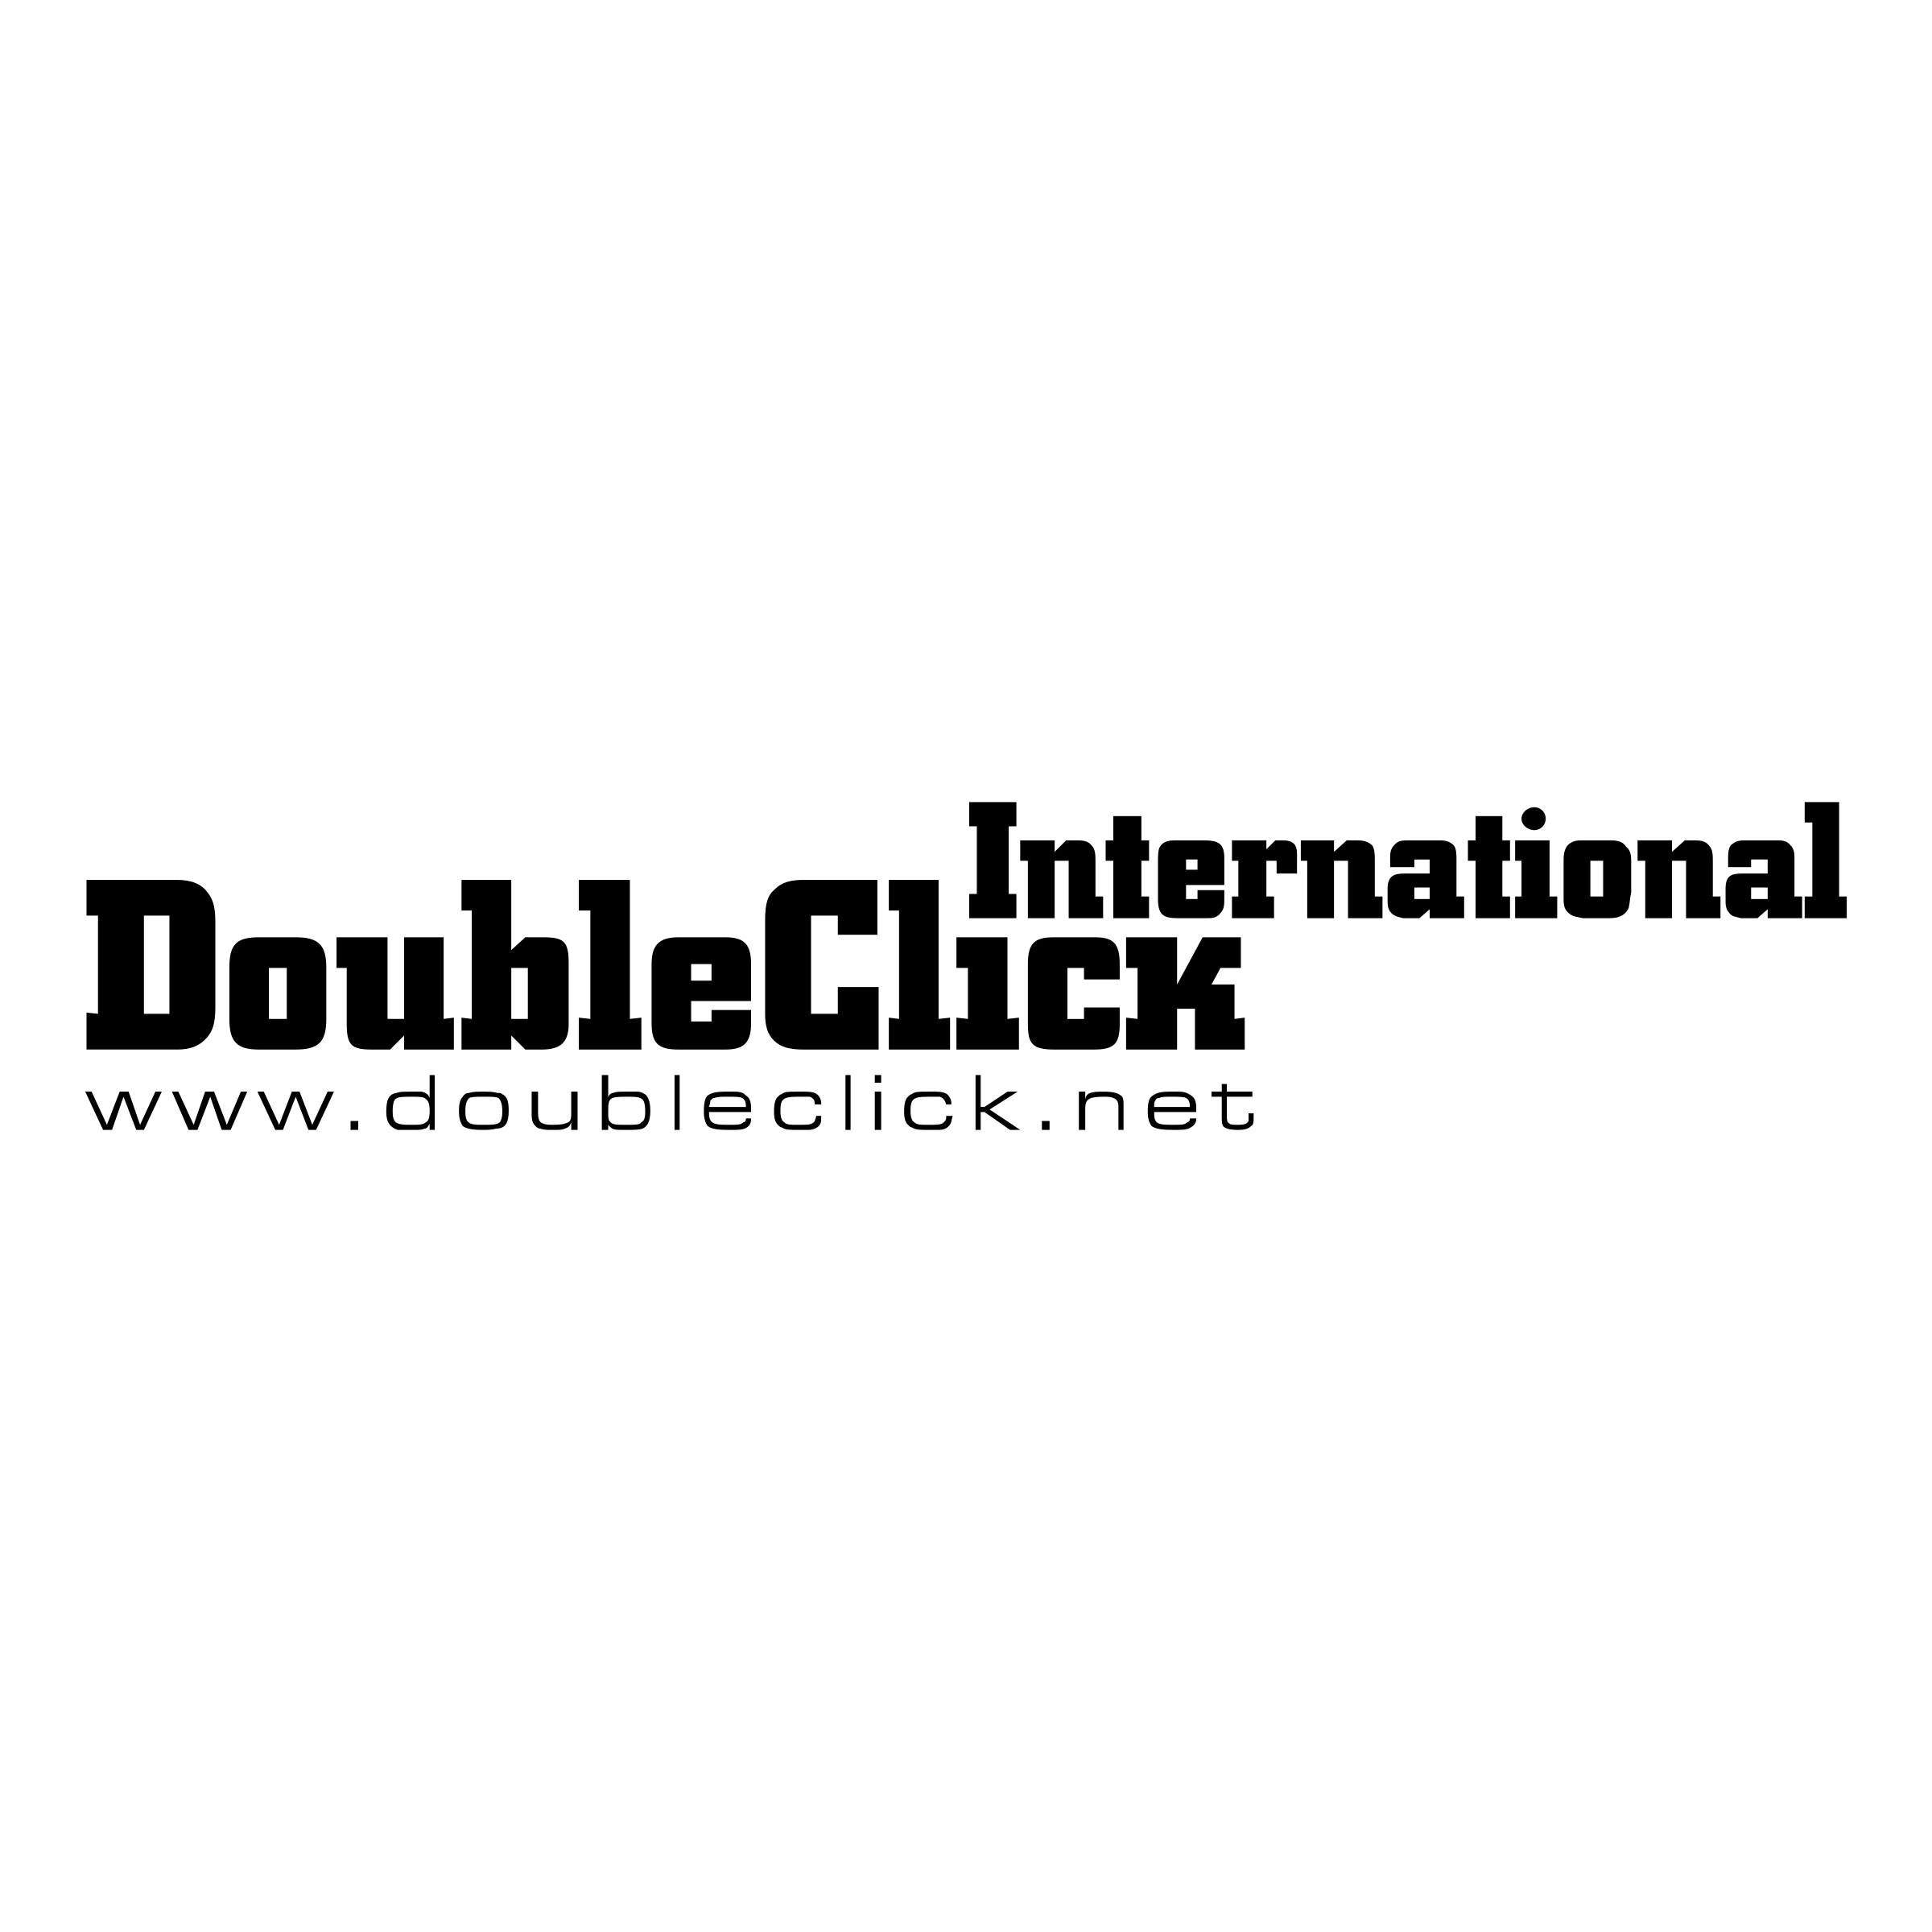 Double Click Logo - DoubleClick International Logo PNG Transparent & SVG Vector ...